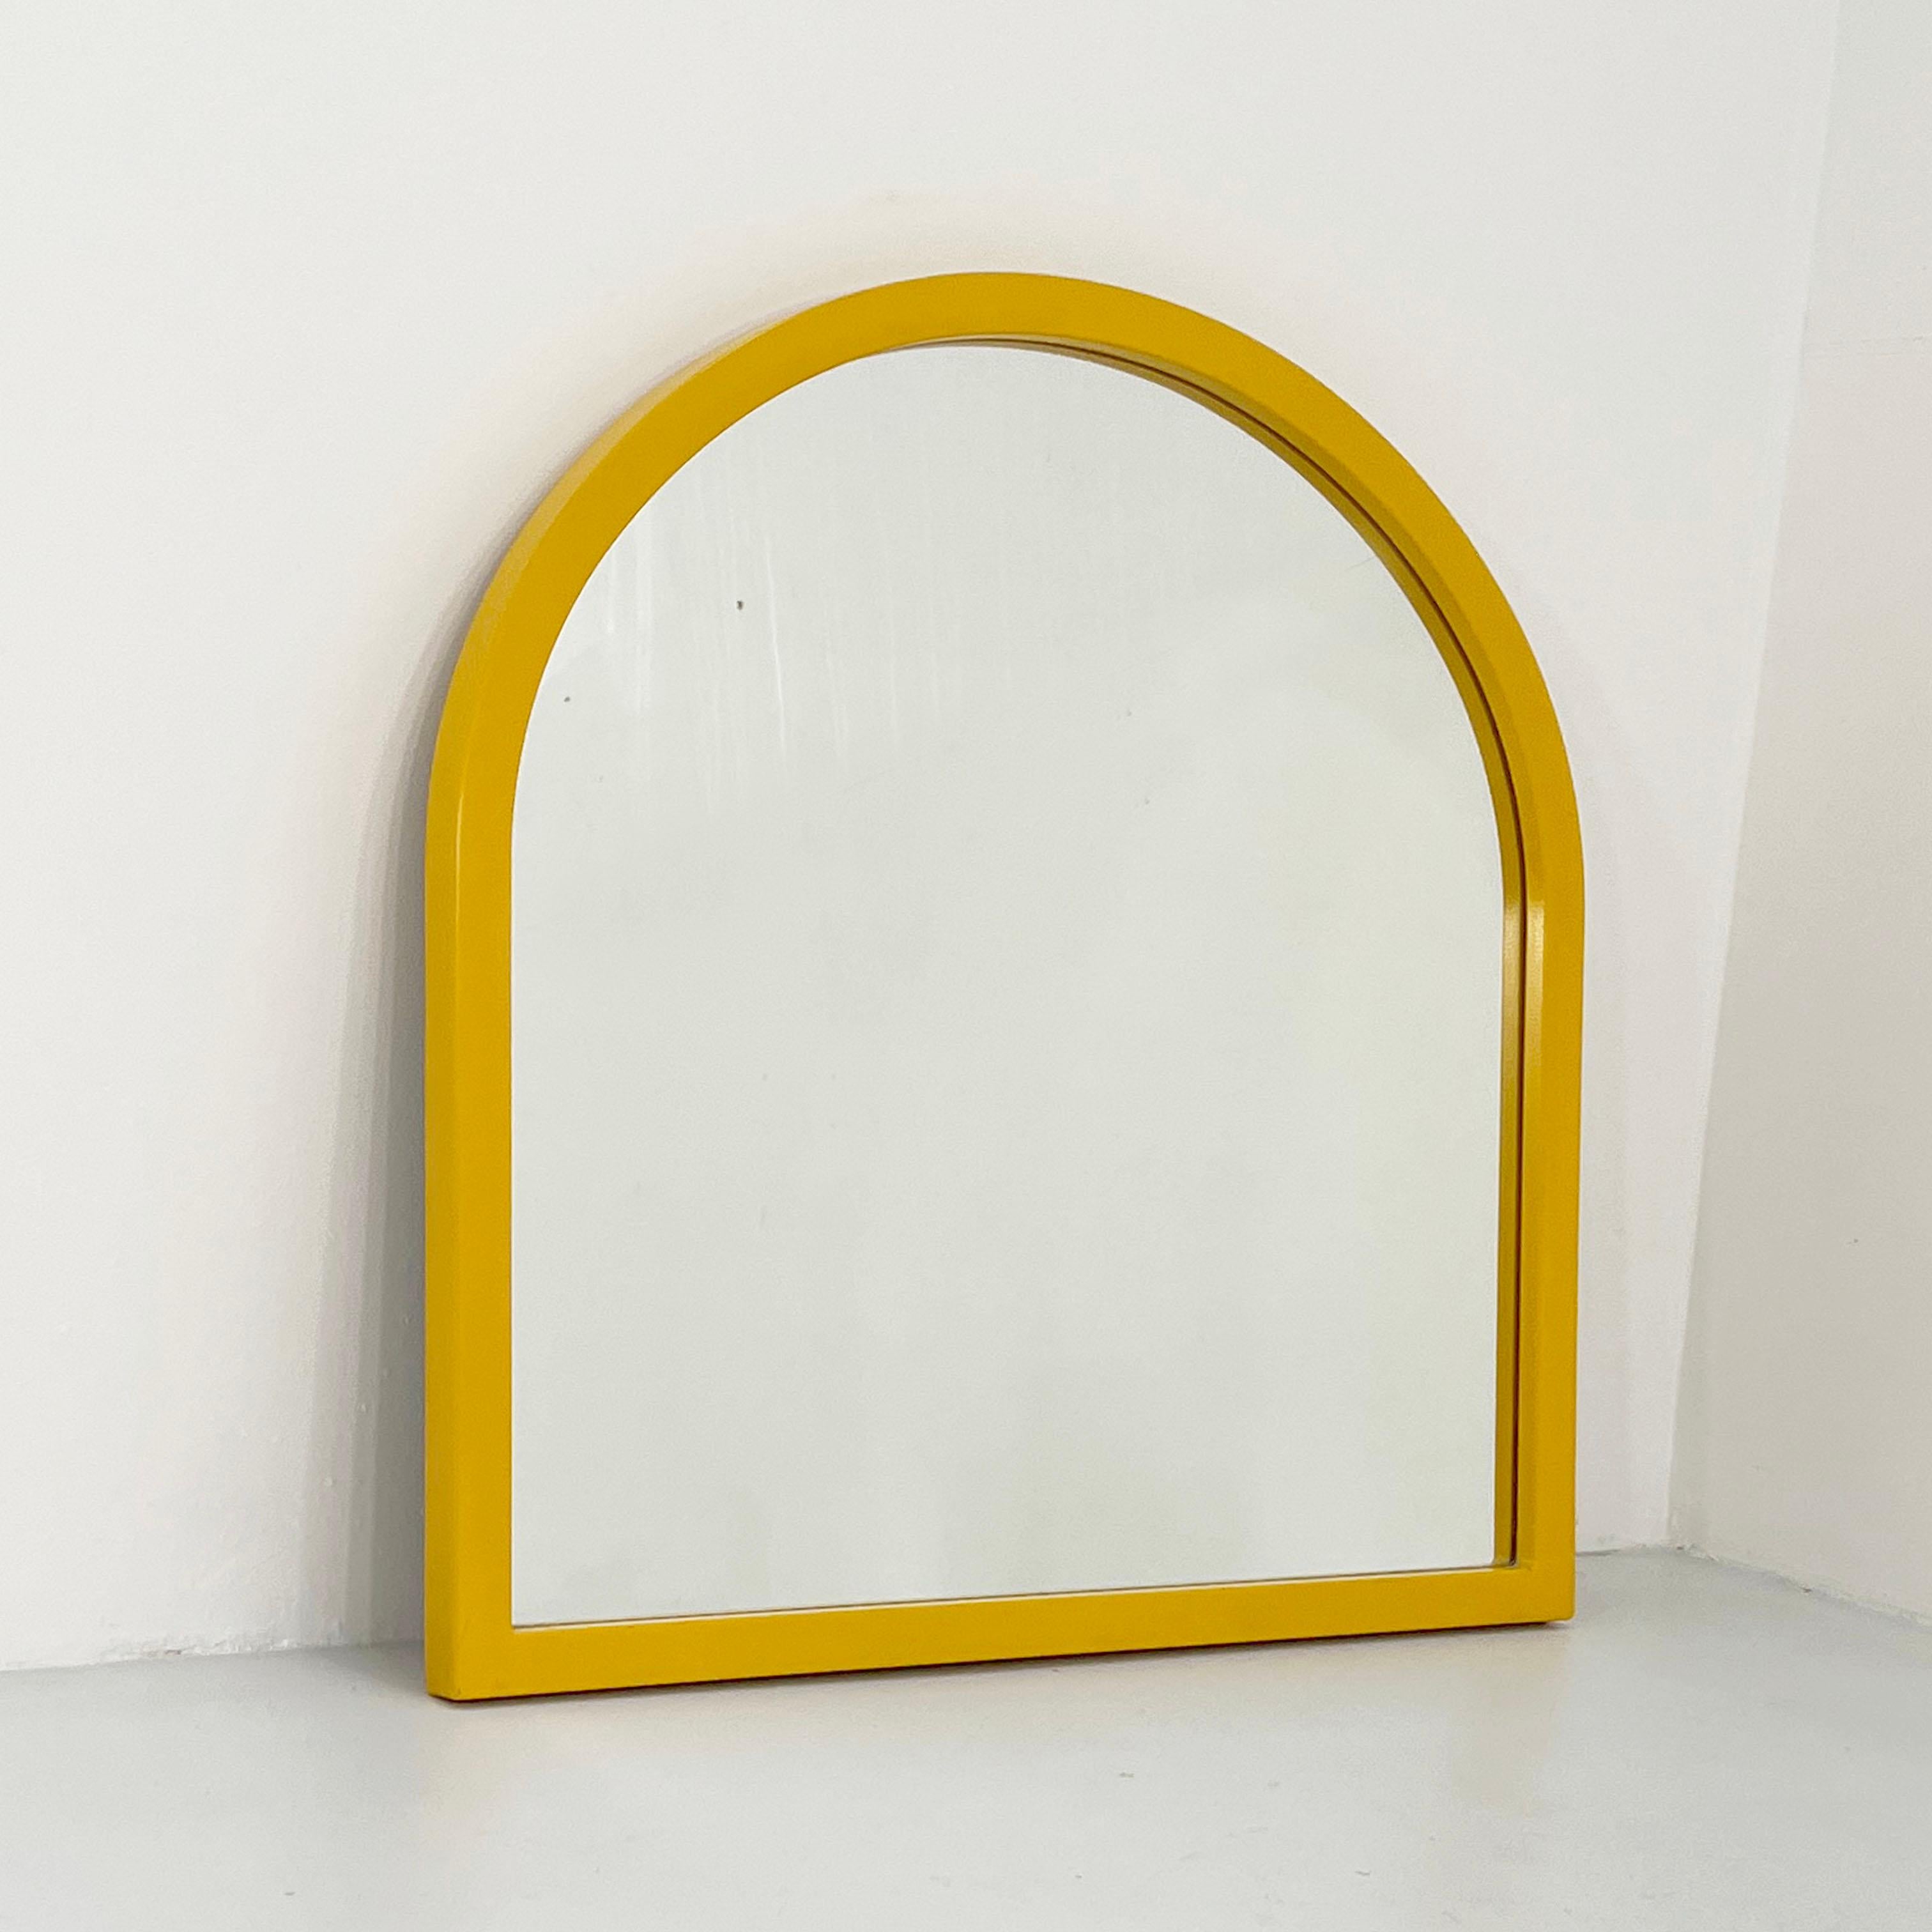 Yellow Frame mirror Model 4720 by Anna Castelli Ferrieri for Kartell, 1980s
Designer - Anna Castelli Ferrieri
Producer - Kartell 
Model - Model 4720
Design Period - Eighties
Measurements - Width 65 cm x Depth 3 cm x Height 65 cm
Materials -